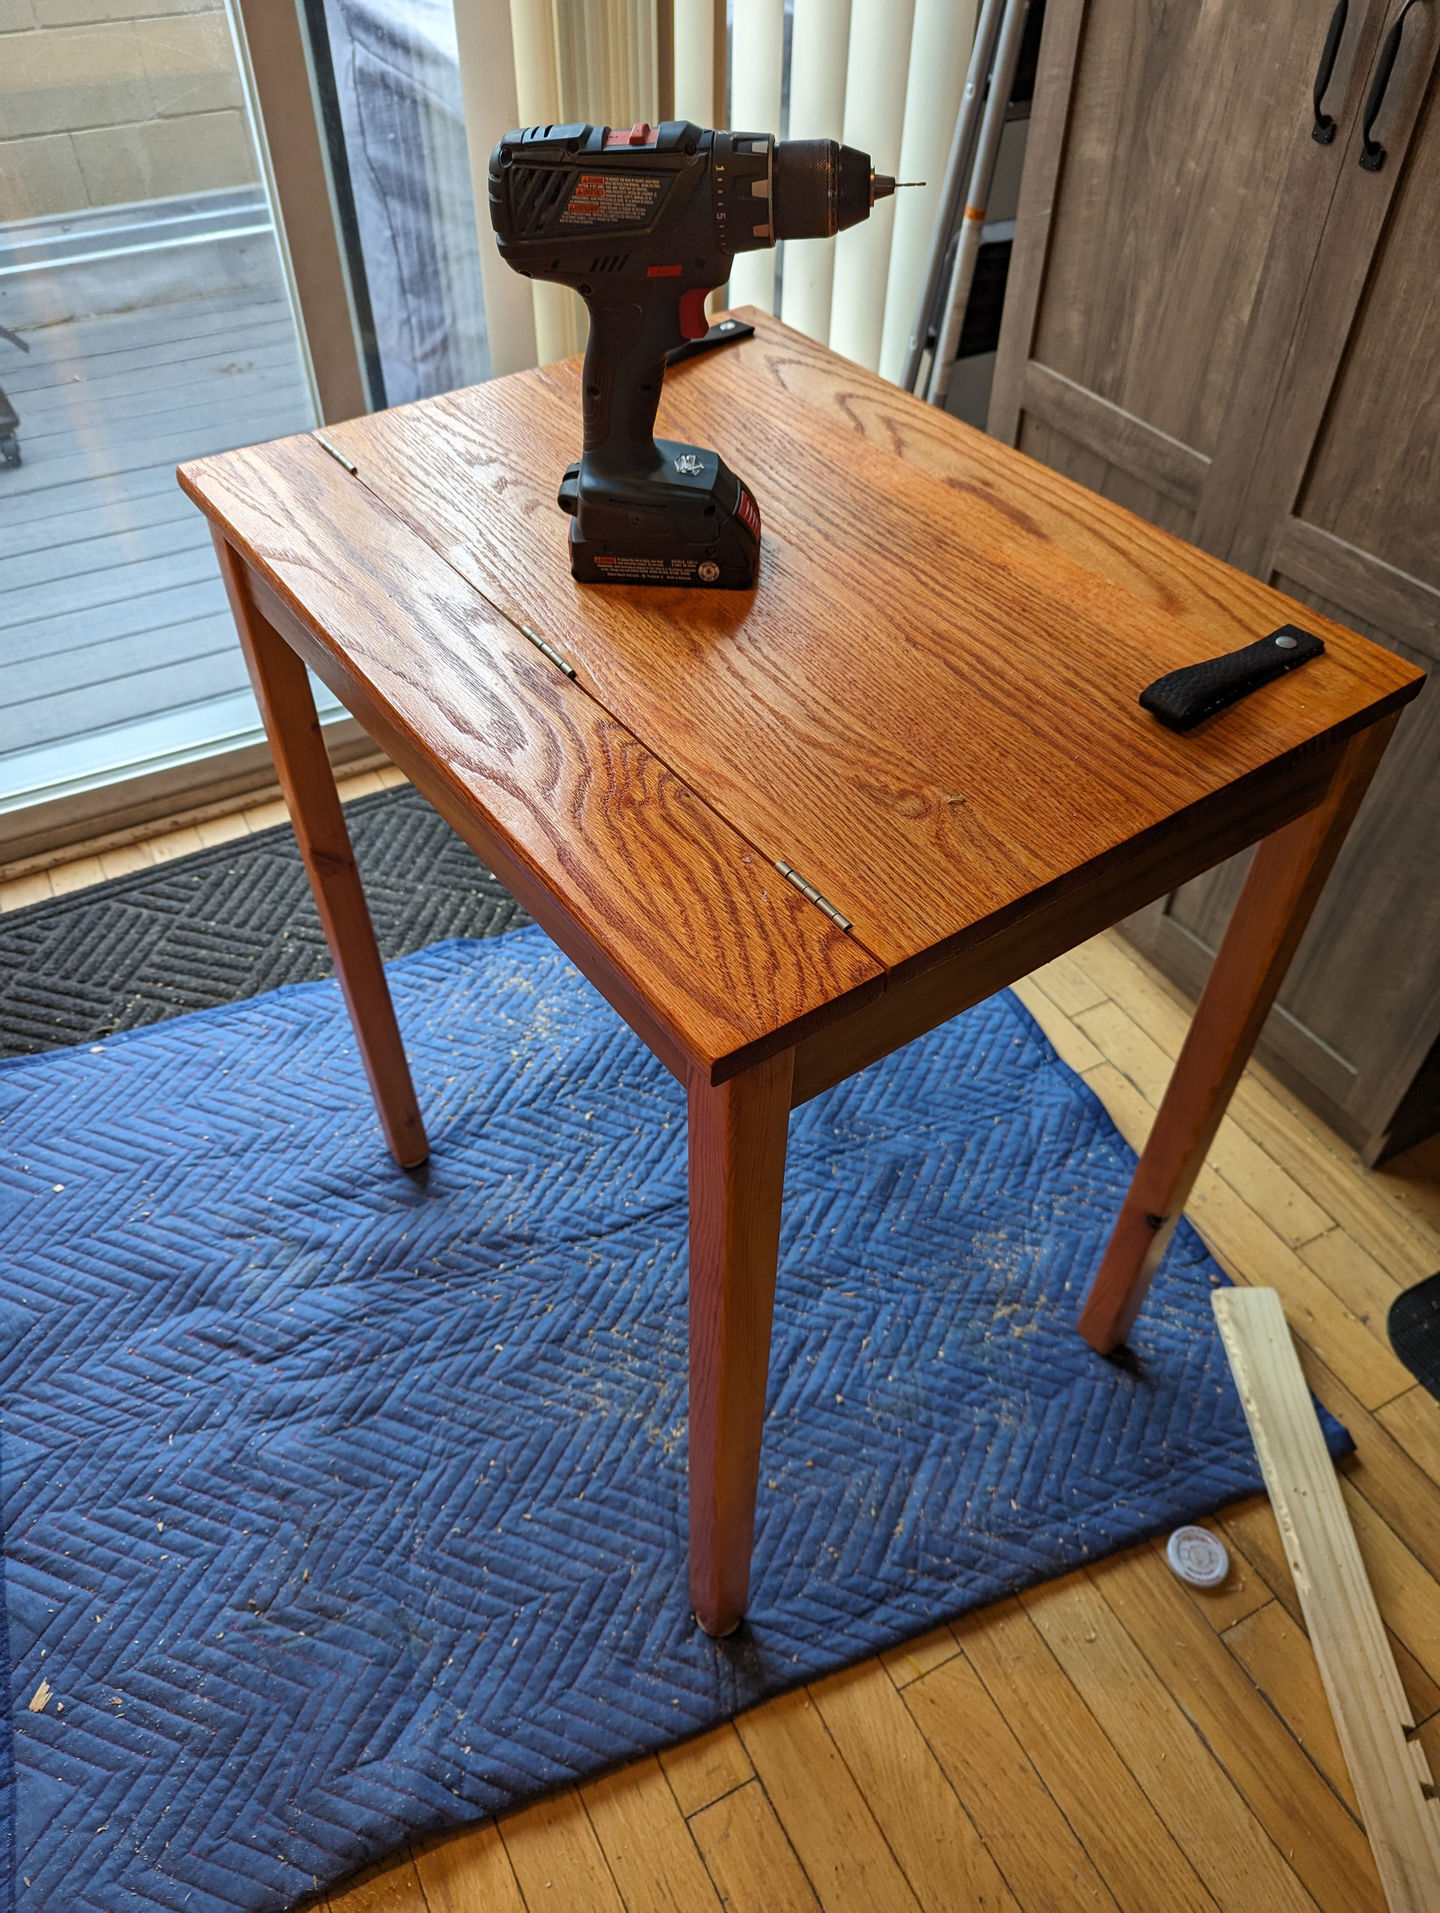 Wooden table, oak poplar and pine